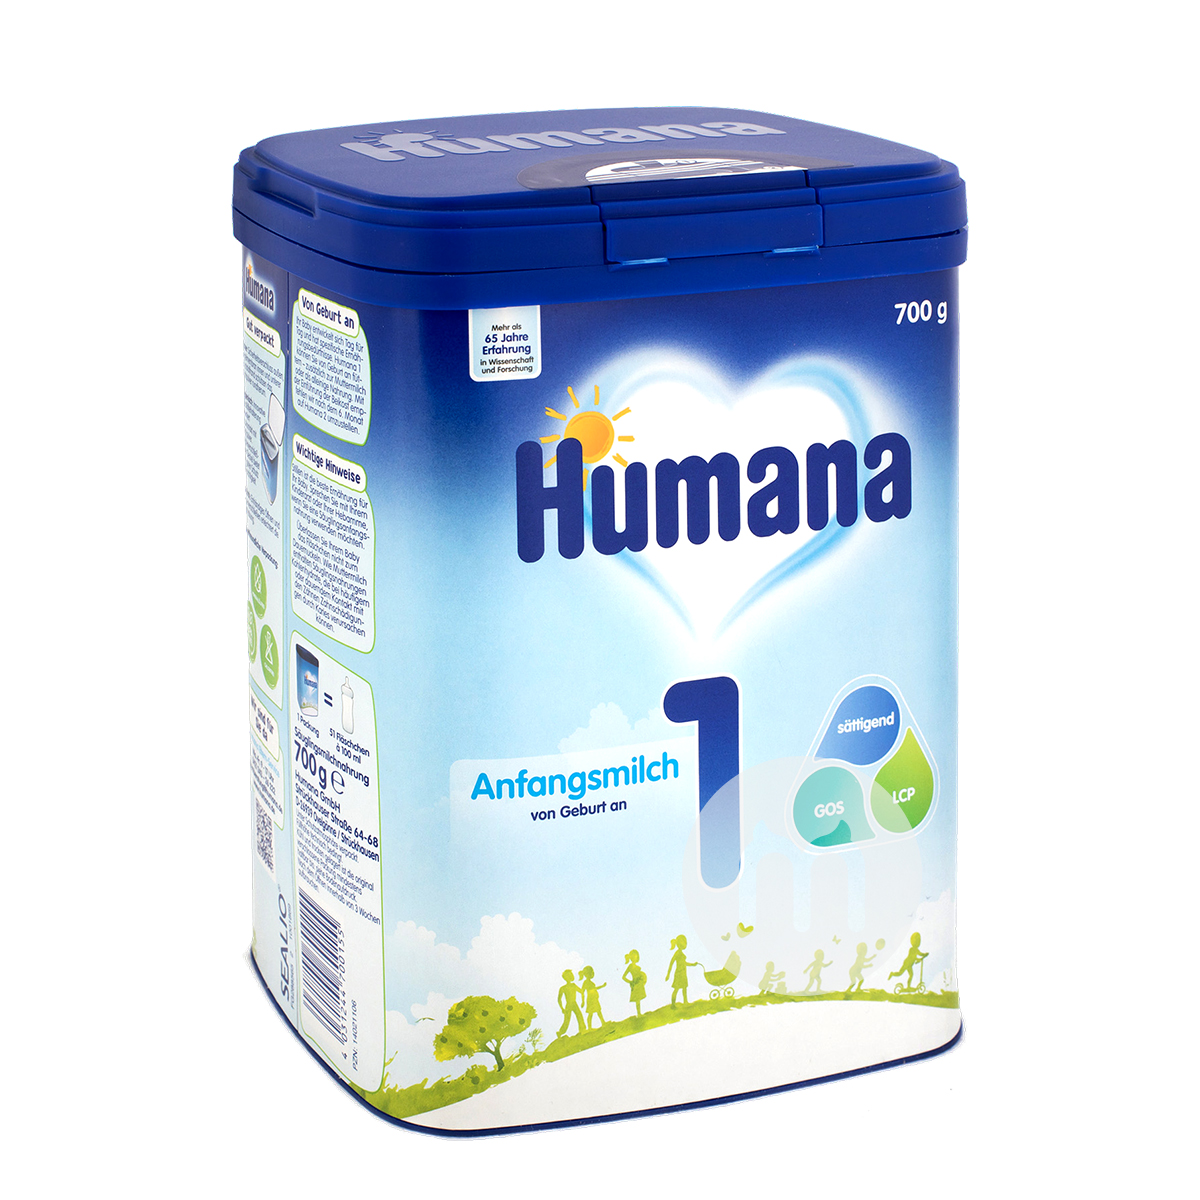 Humana 德國瑚瑪娜嬰兒奶粉1段*4盒 海外本土原版